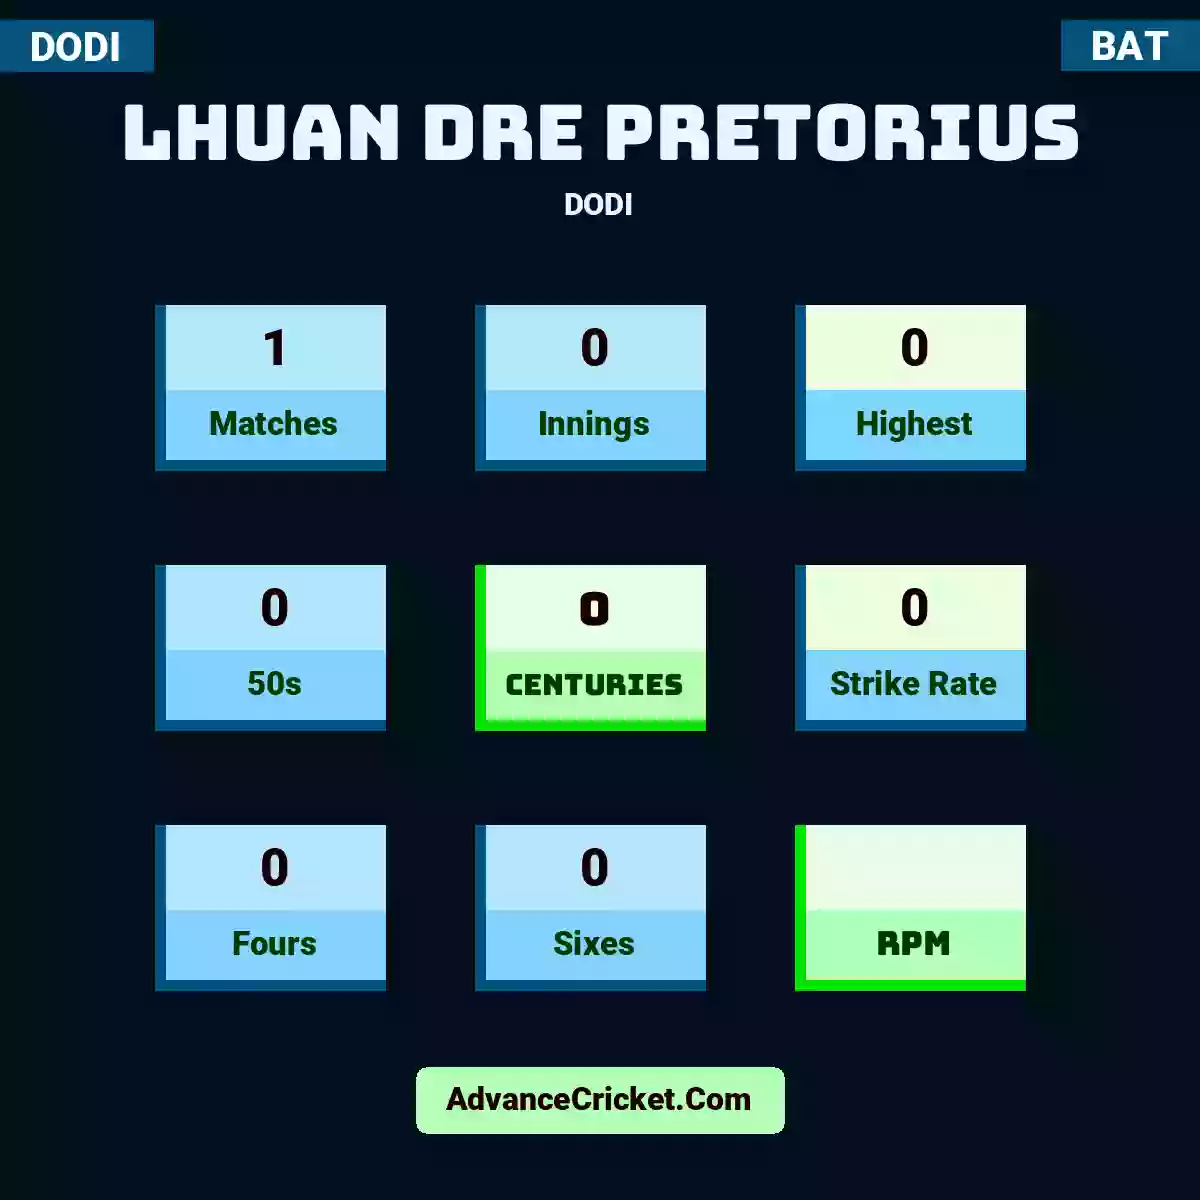 Lhuan dre Pretorius DODI , Lhuan dre Pretorius played 1 matches, scored 0 runs as highest, 0 half-centuries, and 0 centuries, with a strike rate of 0. L.Pretorius hit 0 fours and 0 sixes.